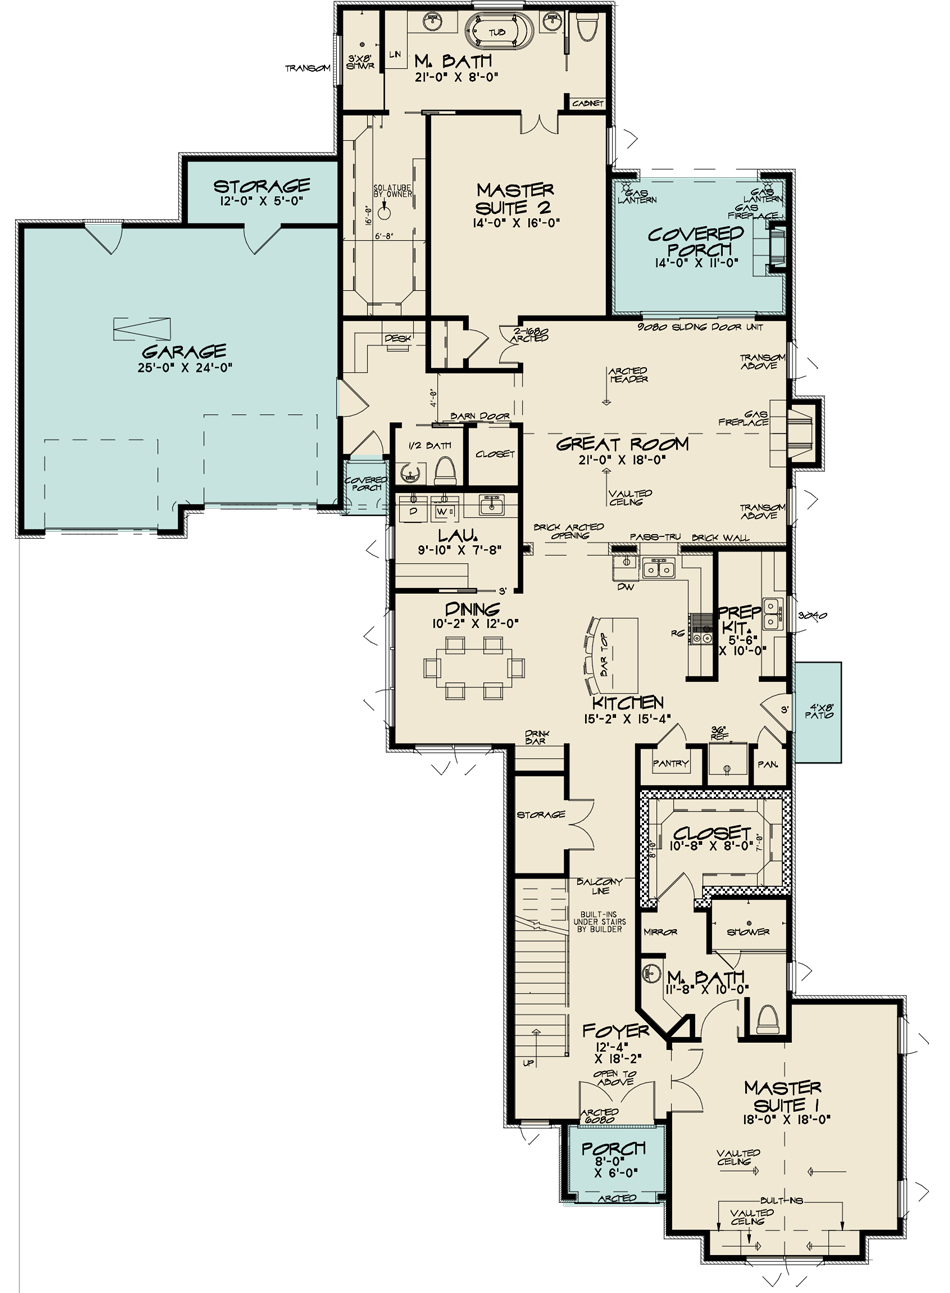 House Plan SMN 1028 Main Floor